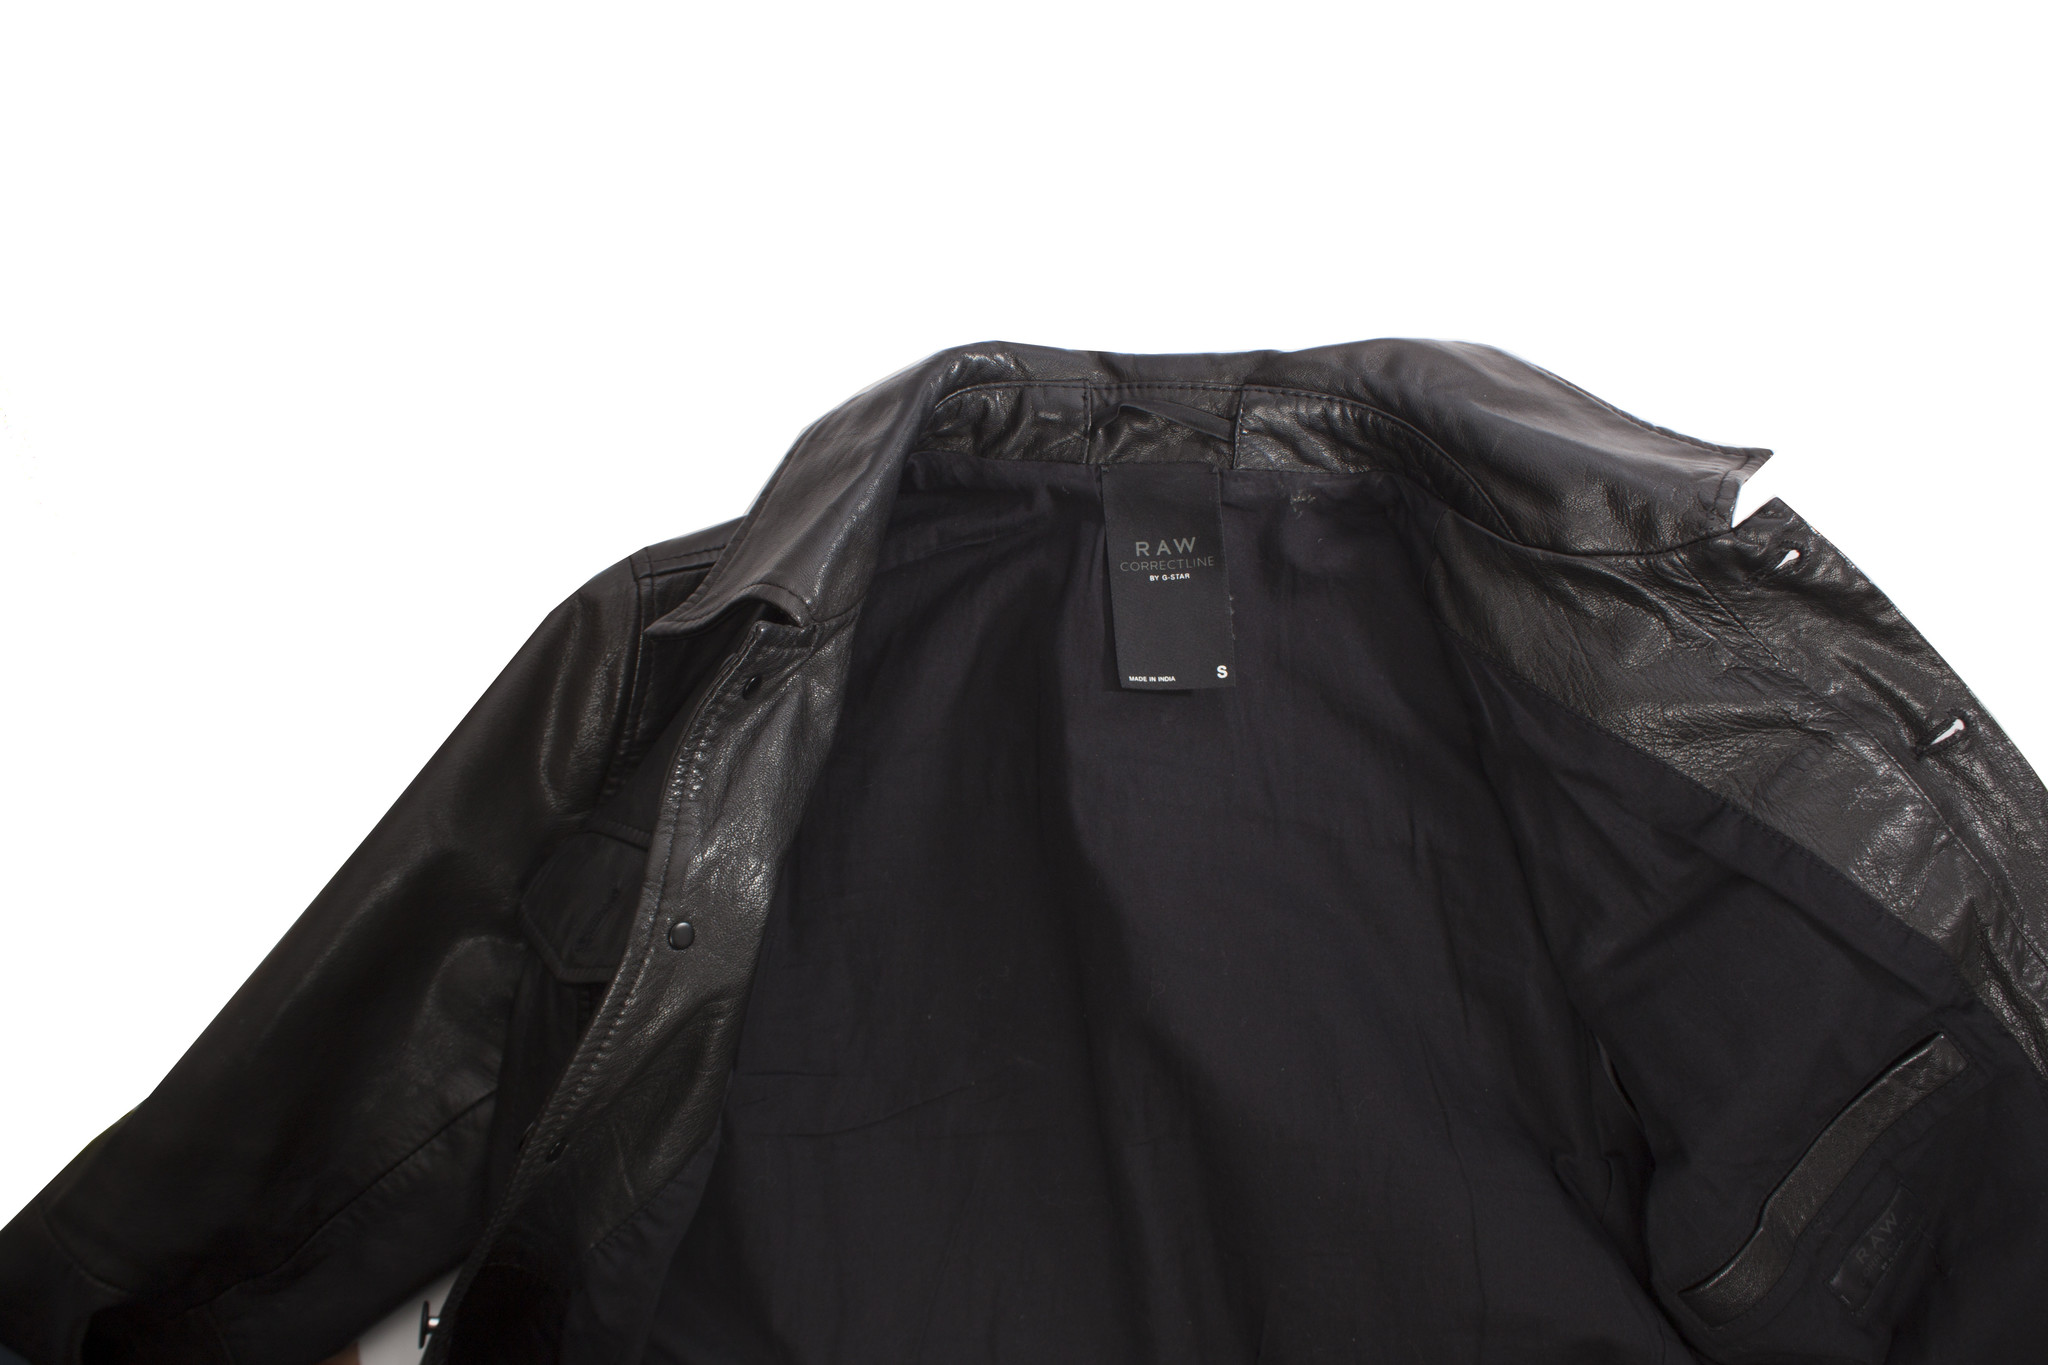 Productie Drank duim G-star Raw, zwart lederen jas in maat S. - Unique Designer Pieces